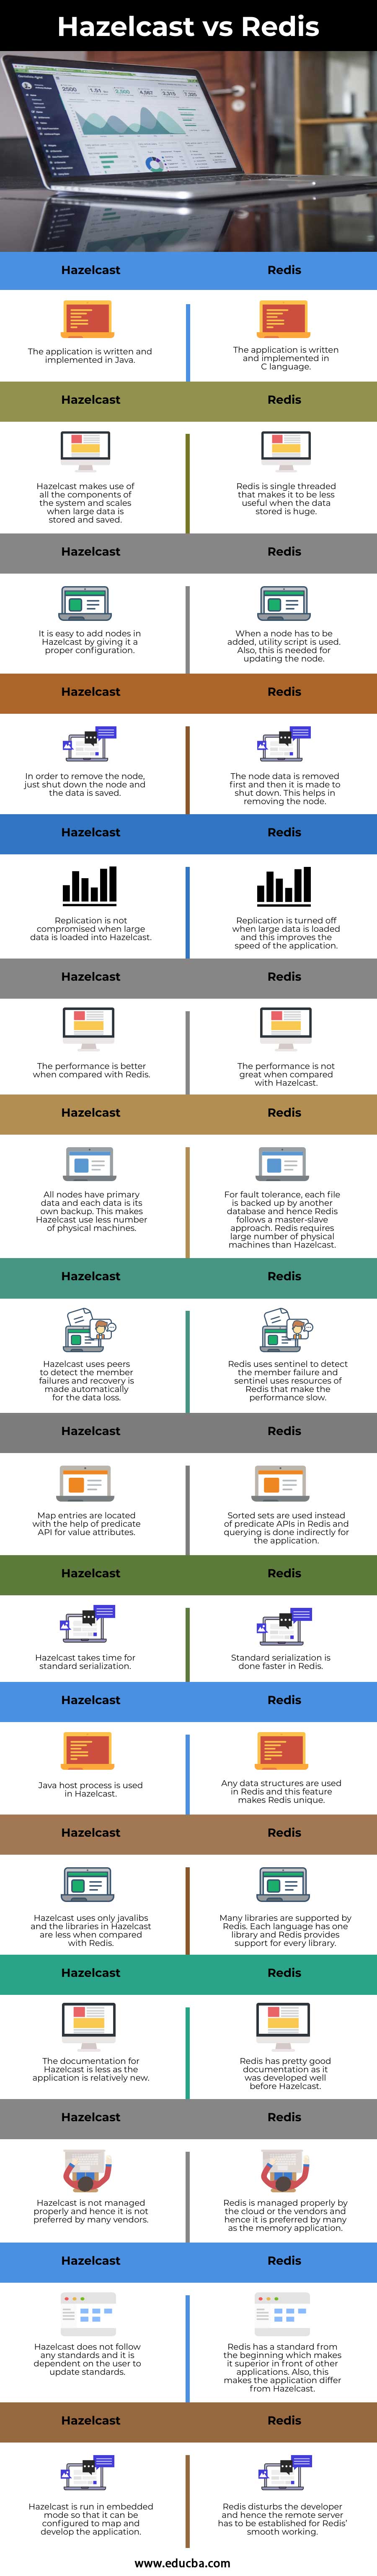 Hazelcast-vs-Redis-info